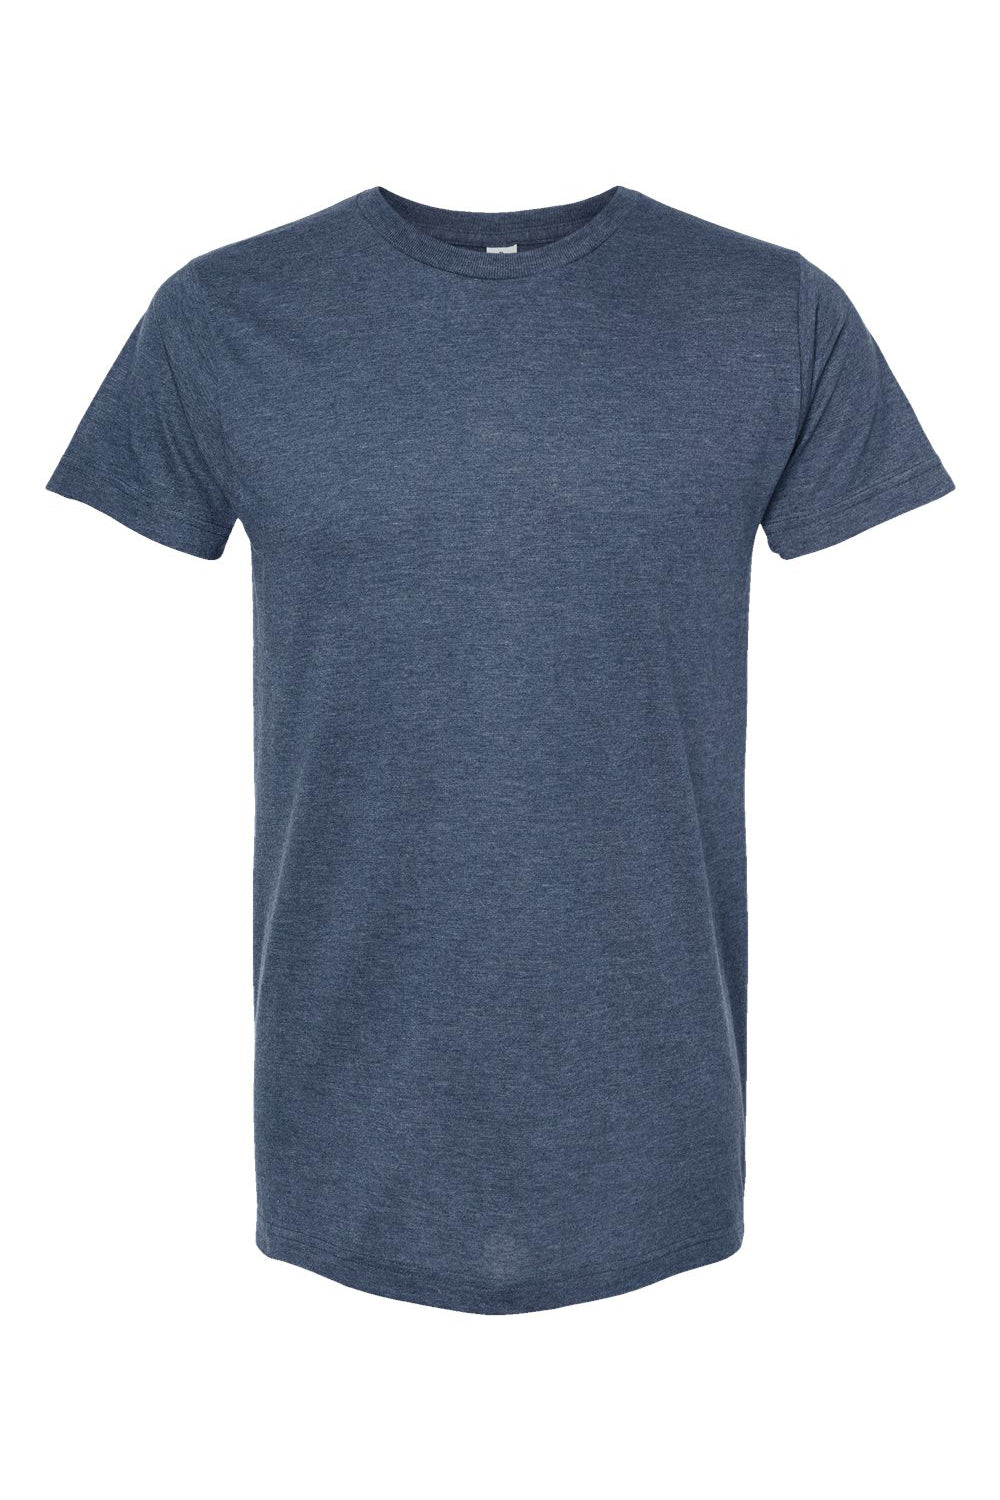 Tultex 202 Mens Fine Jersey Short Sleeve Crewneck T-Shirt Heather Denim Blue Flat Front